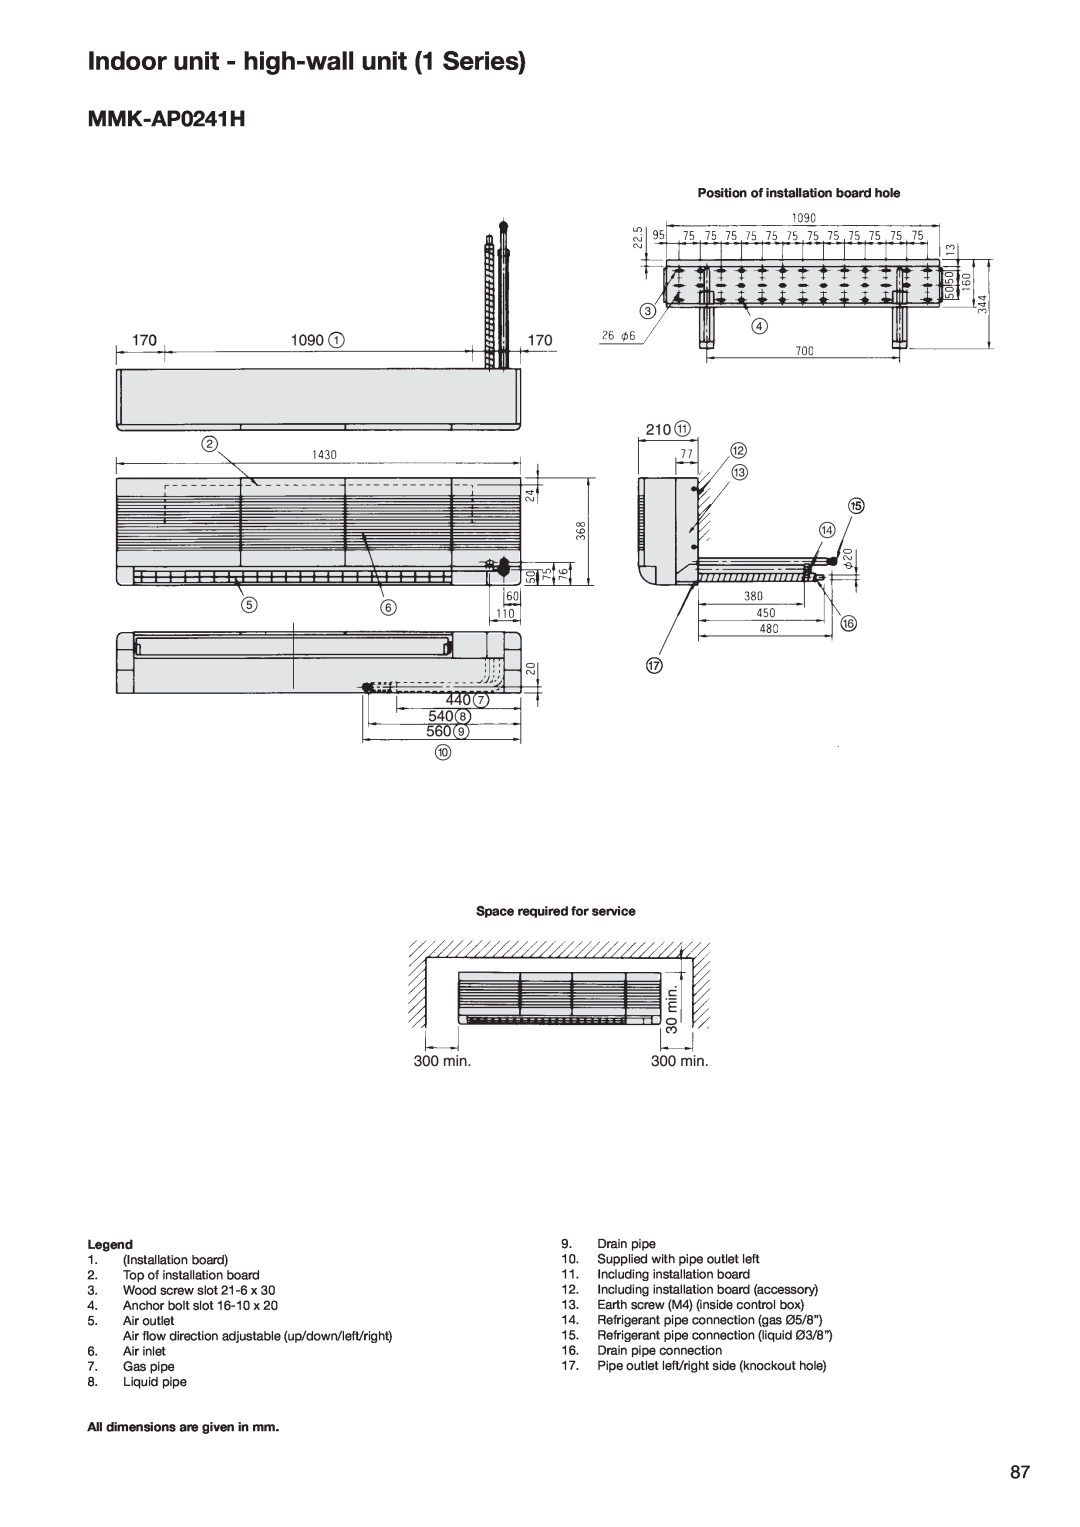 Toshiba HFC R-410A manual MMK-AP0241H, Indoor unit - high-wallunit 1 Series 